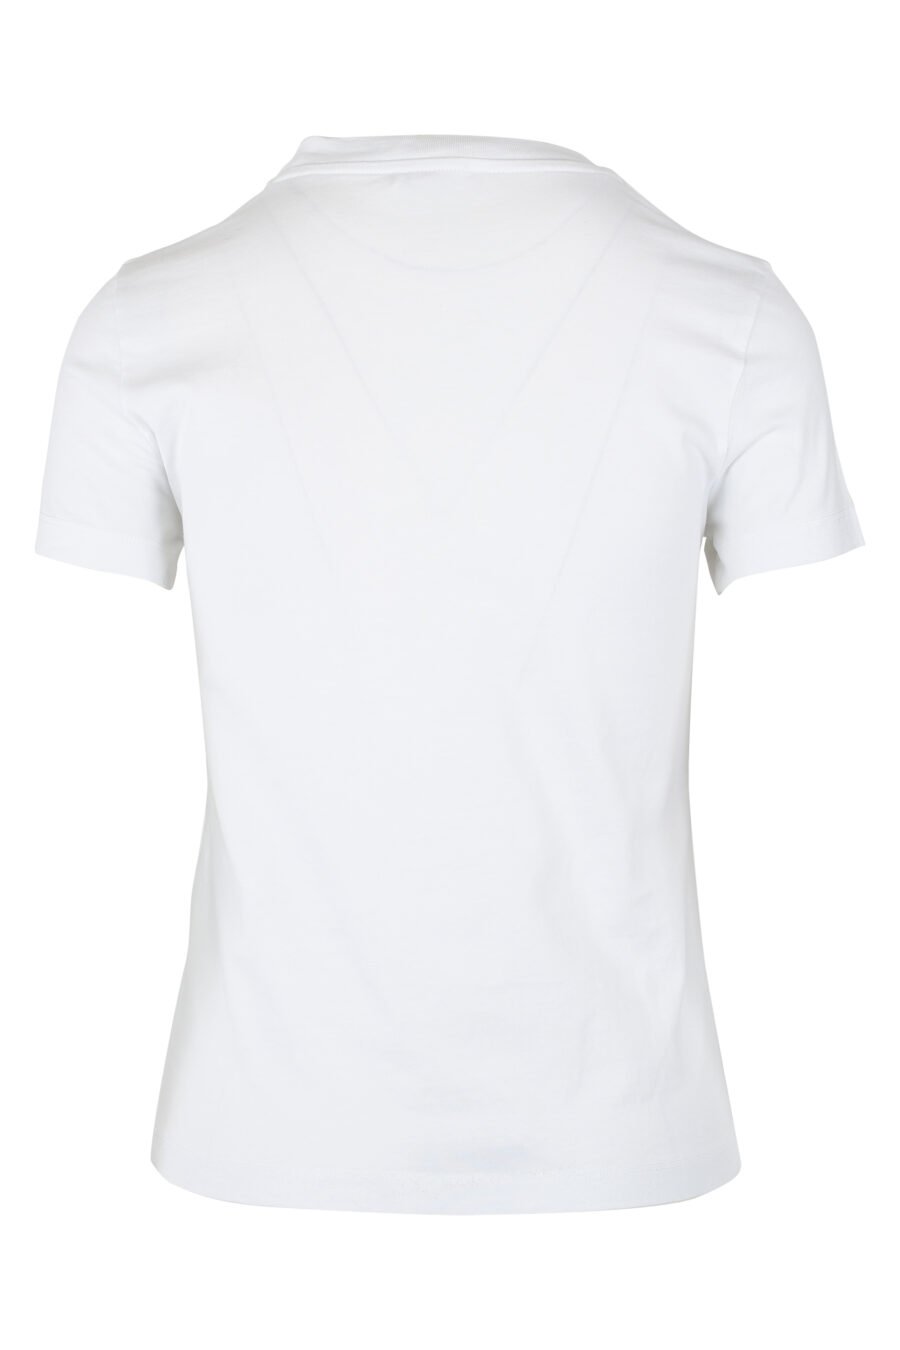 Camiseta blanca con minilogo rojo - IMG 9525